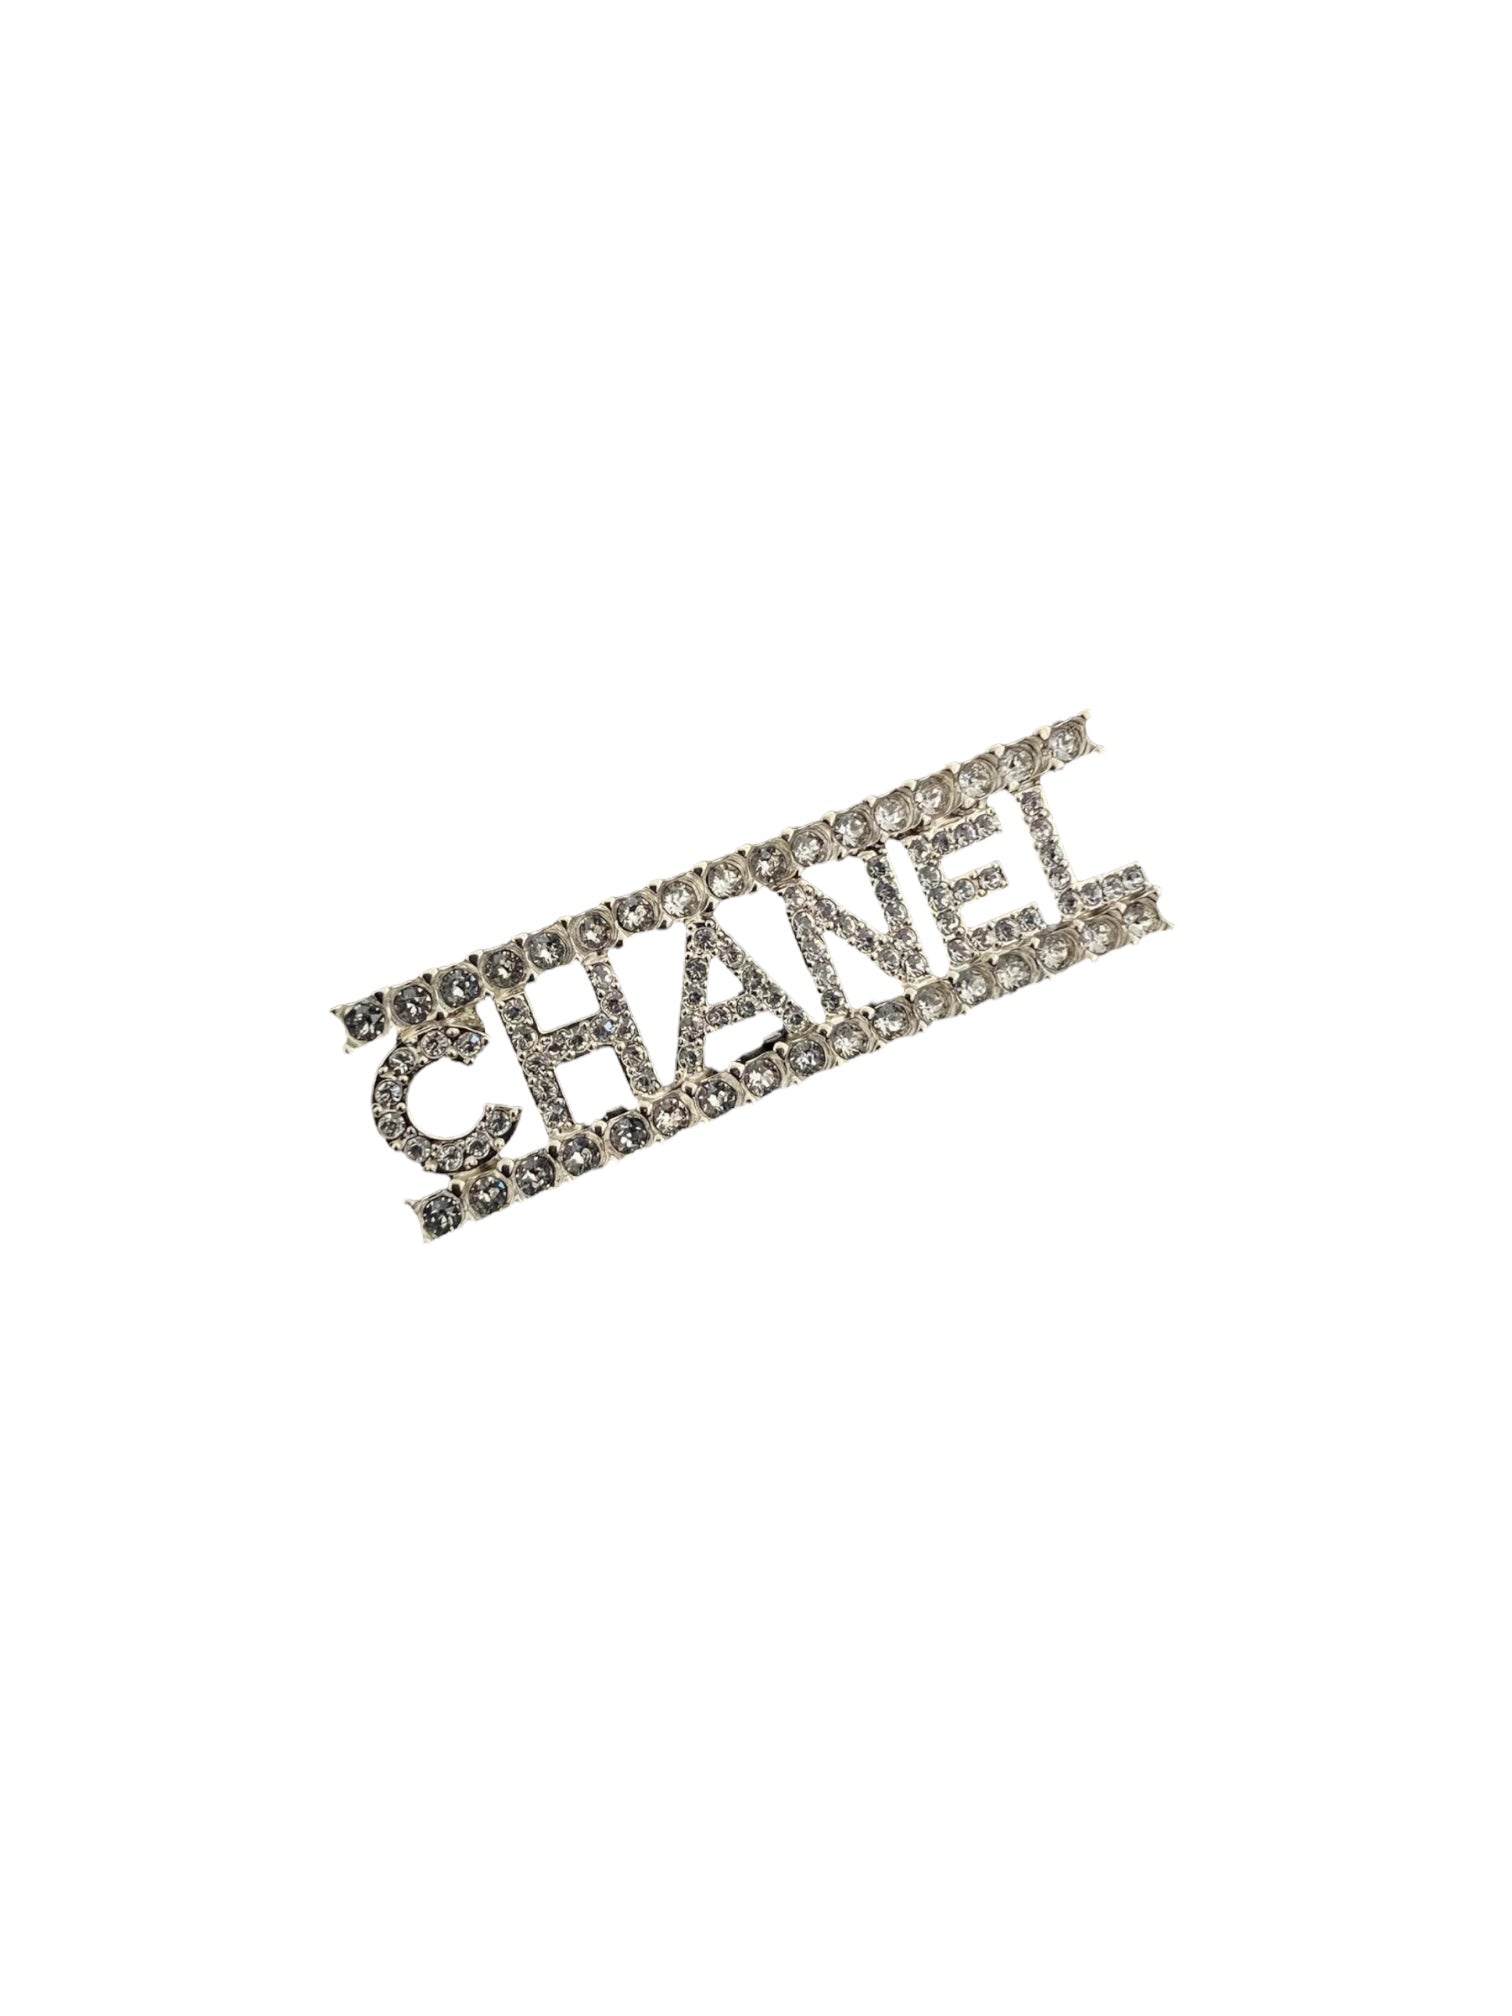 BRAND NEW CHANEL 22S Letter Logo Crystal Brooch w/SHW